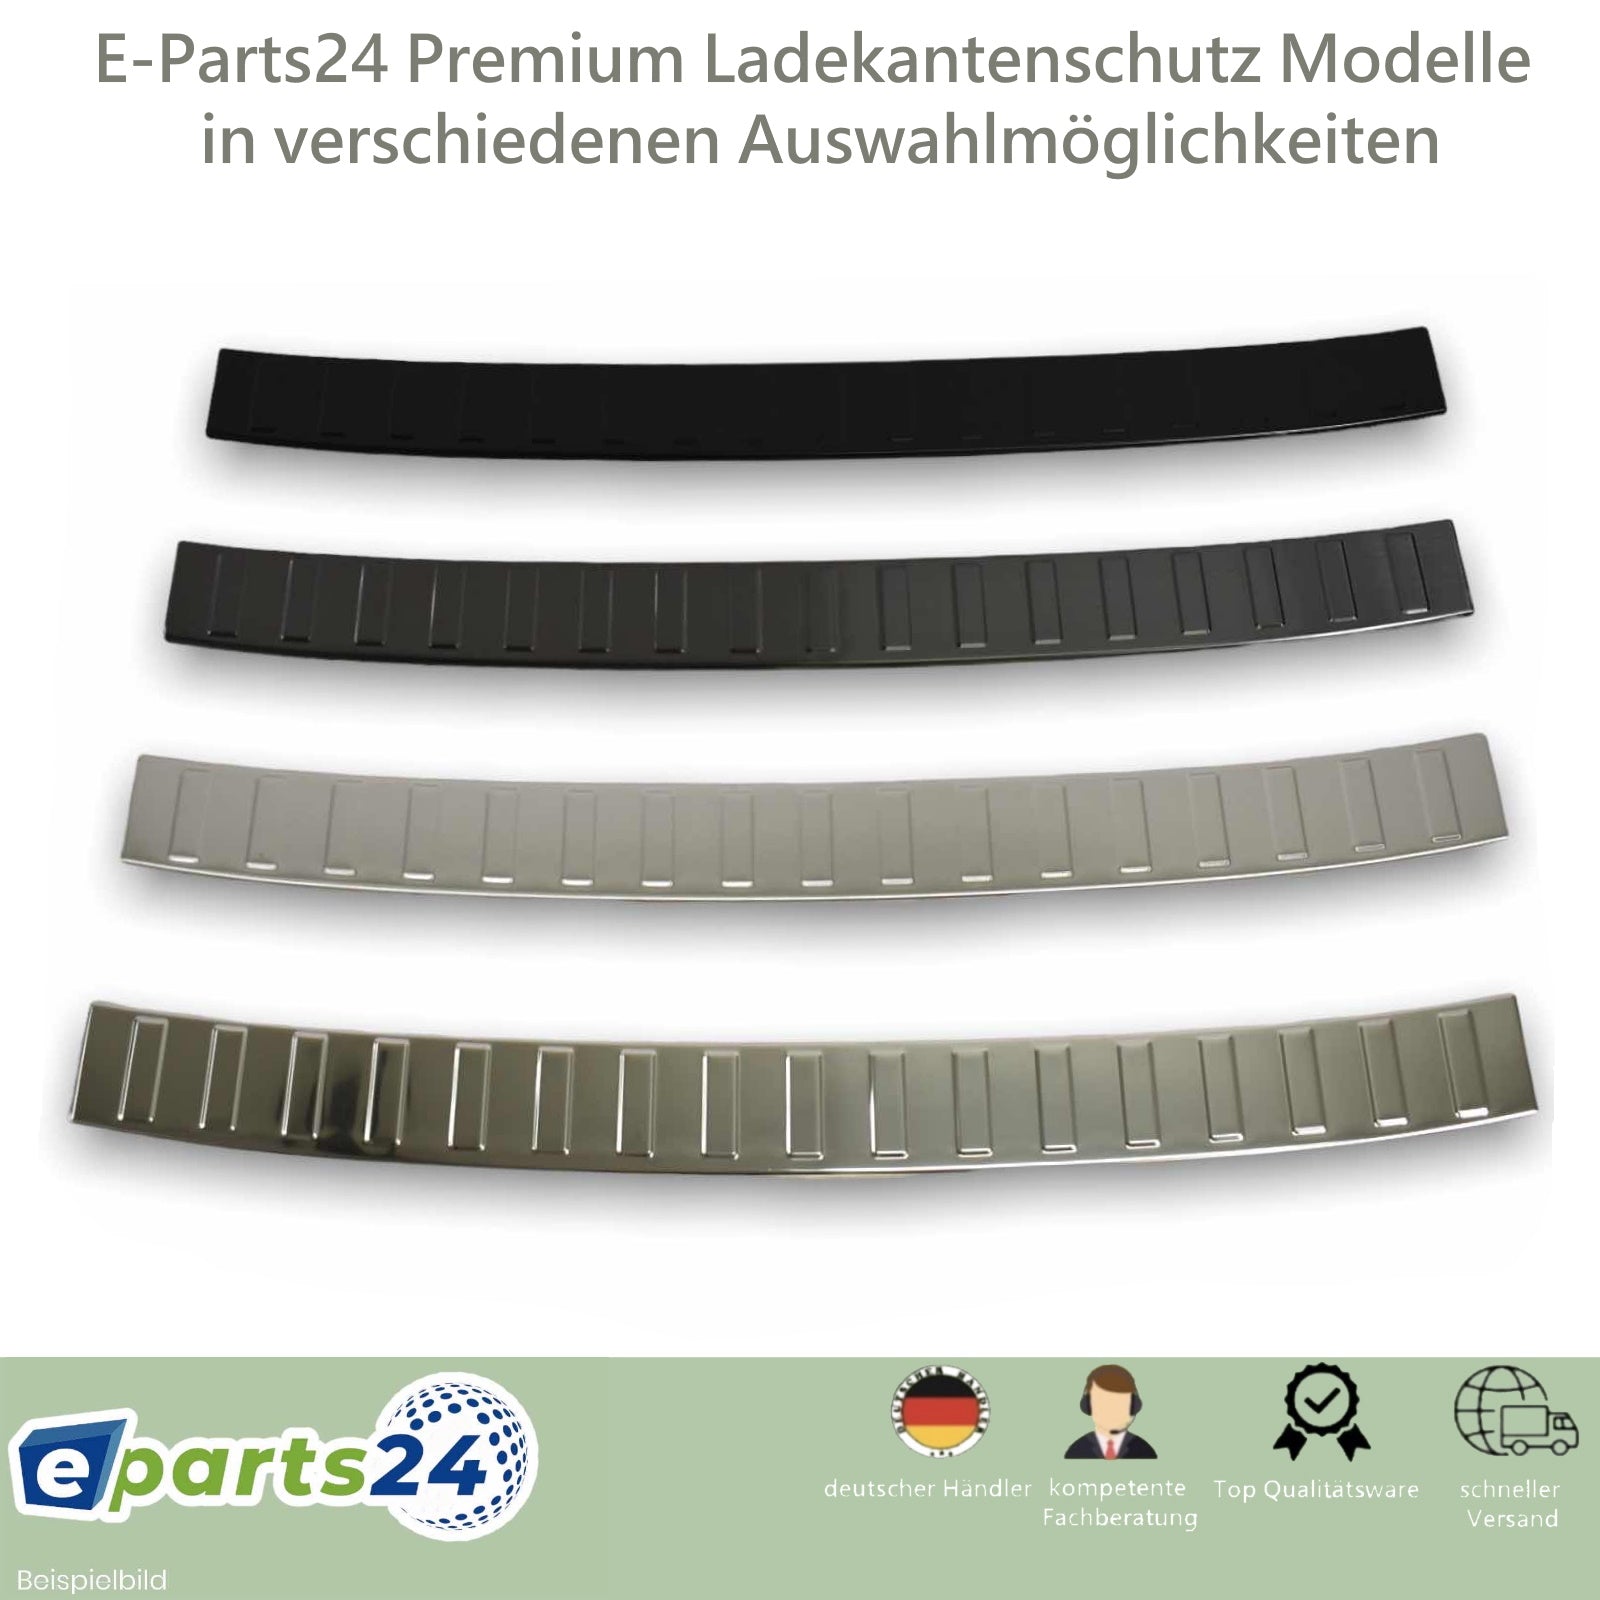 Ladekantenschutz Heckschutz für VW Touran Edelstahl 1T3 – g 2010-2015 Bj E-Parts24